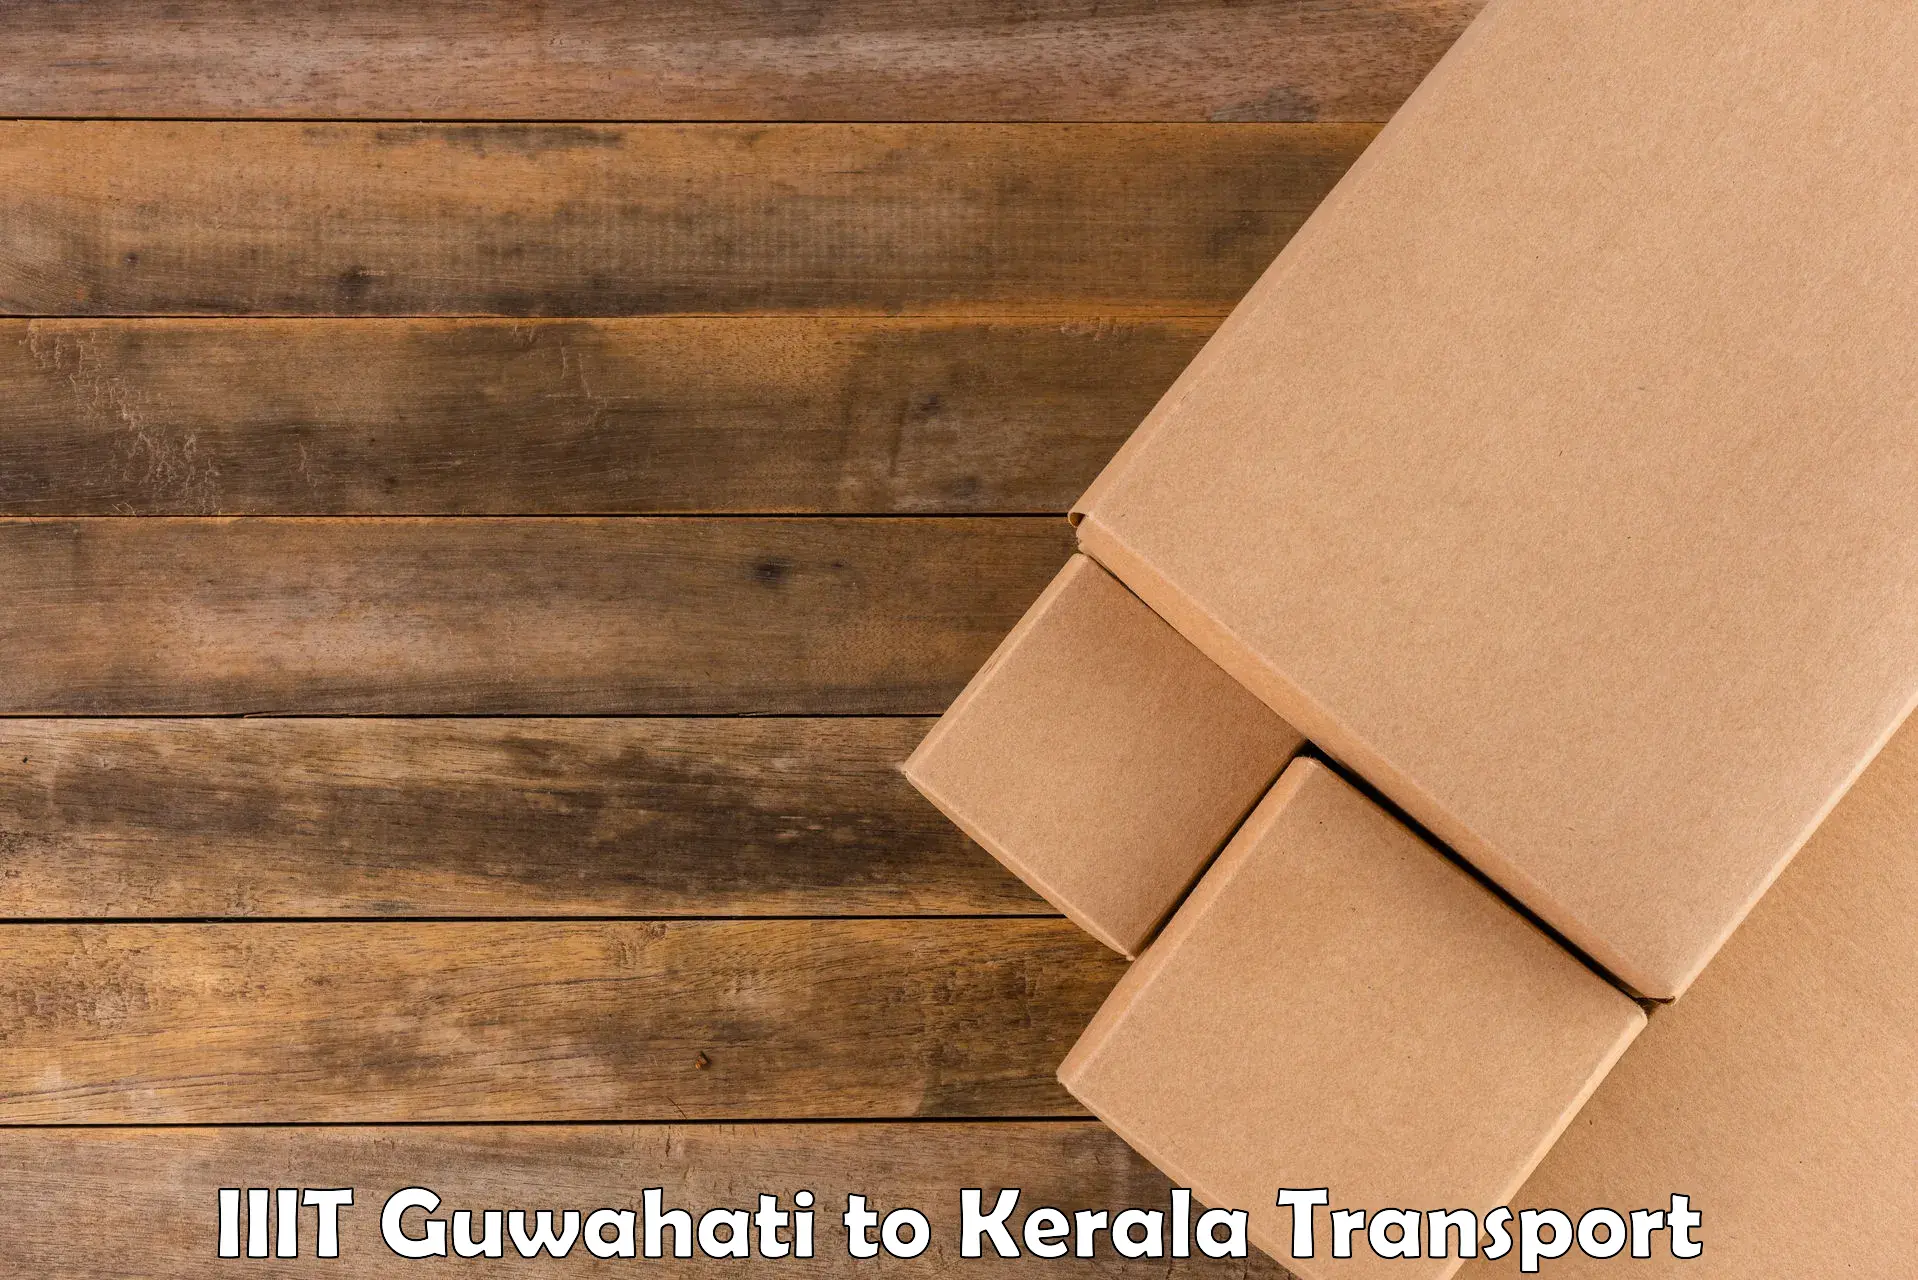 Express transport services IIIT Guwahati to Calicut